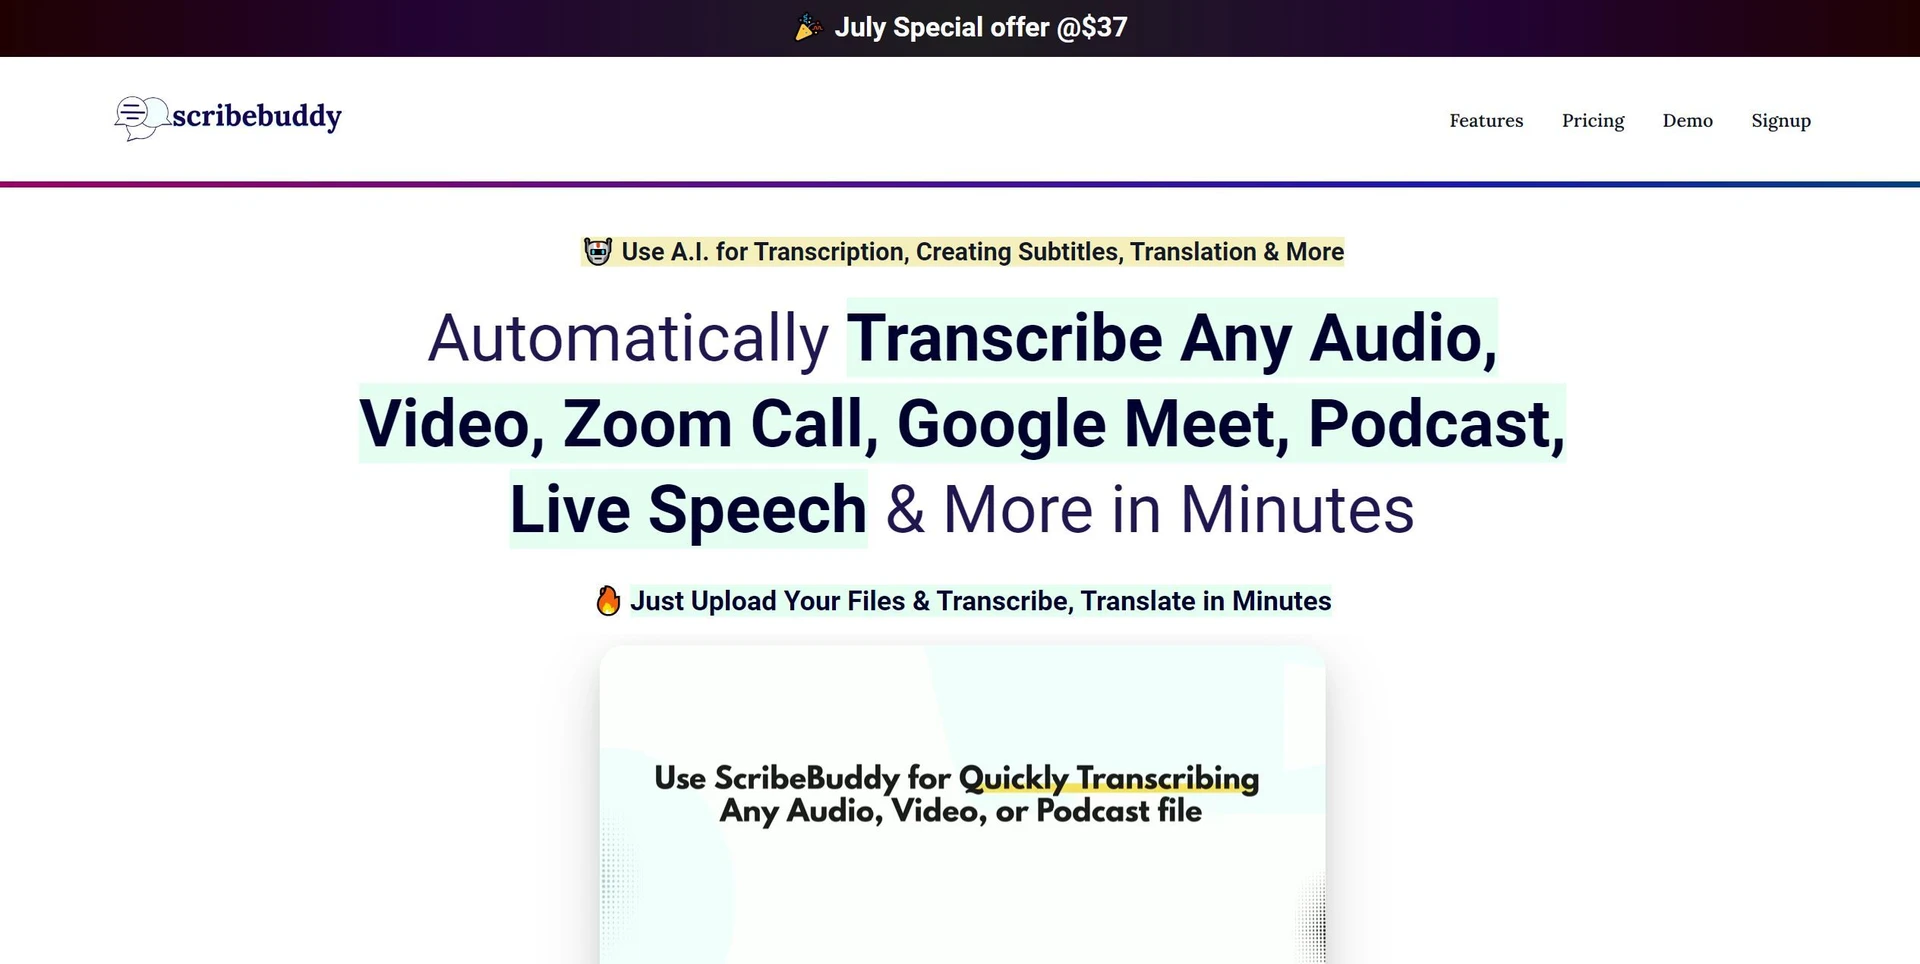 AI Transcription, Subtitles, & Translation